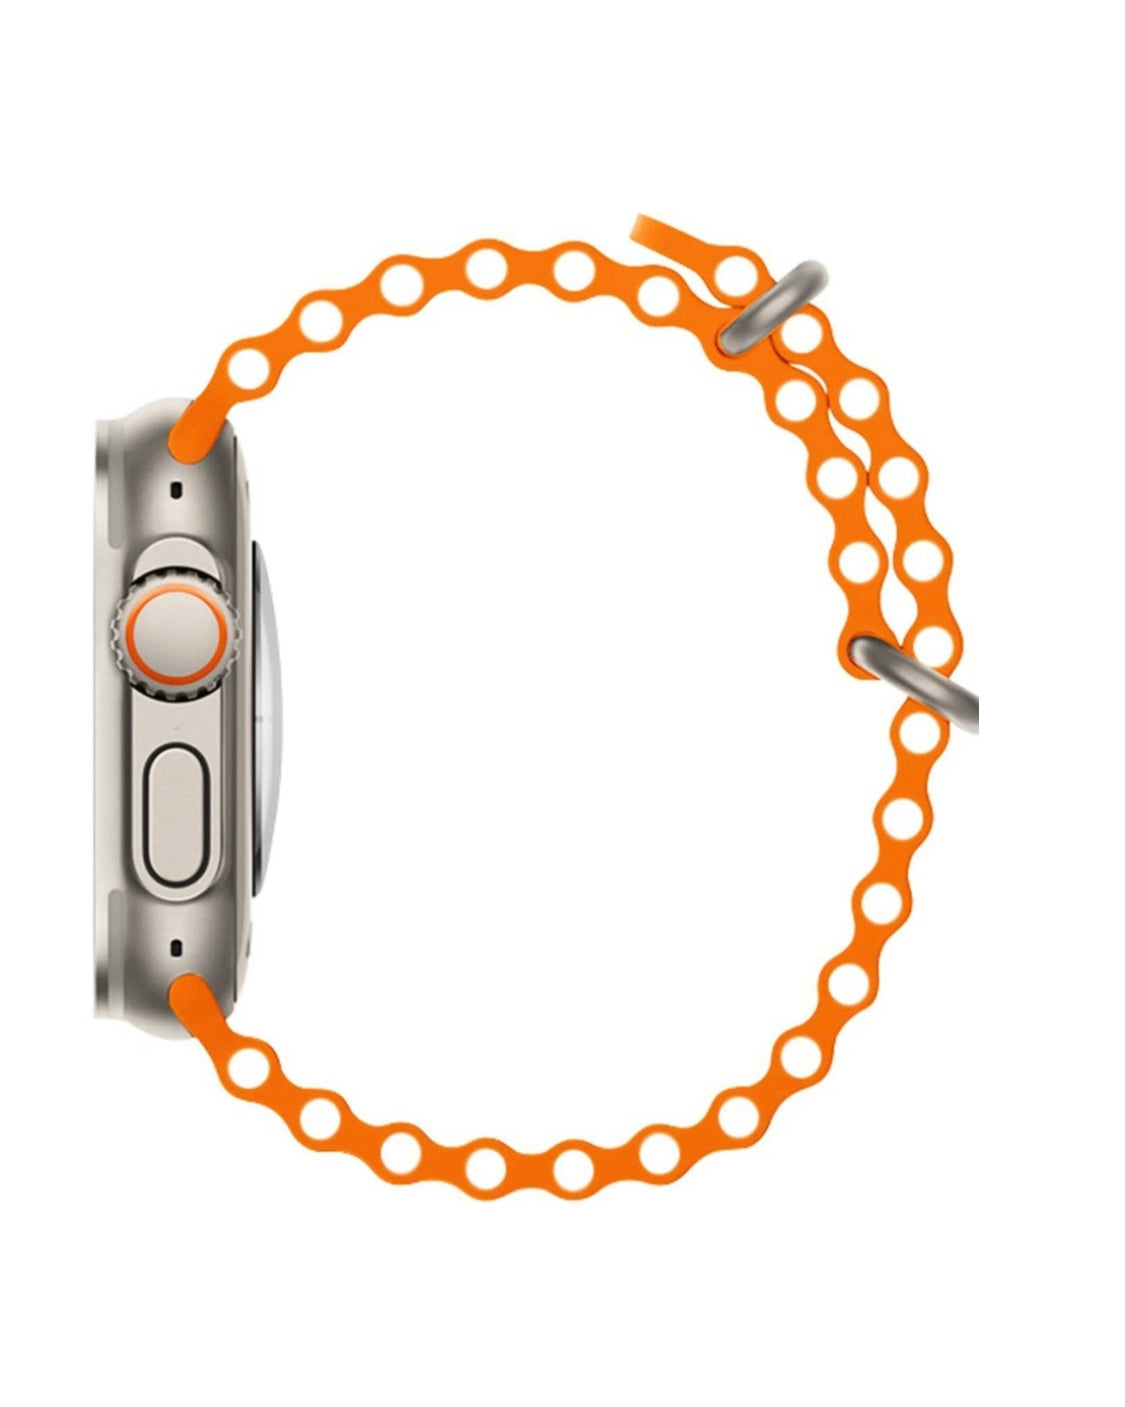 Watch 8 Ultra Smart Watch Men Two Watch NFC Door Unlock Smartwatch Bluetooth Call Wireless Charge Fitness Bracelet (Ultra T-800 Orange)